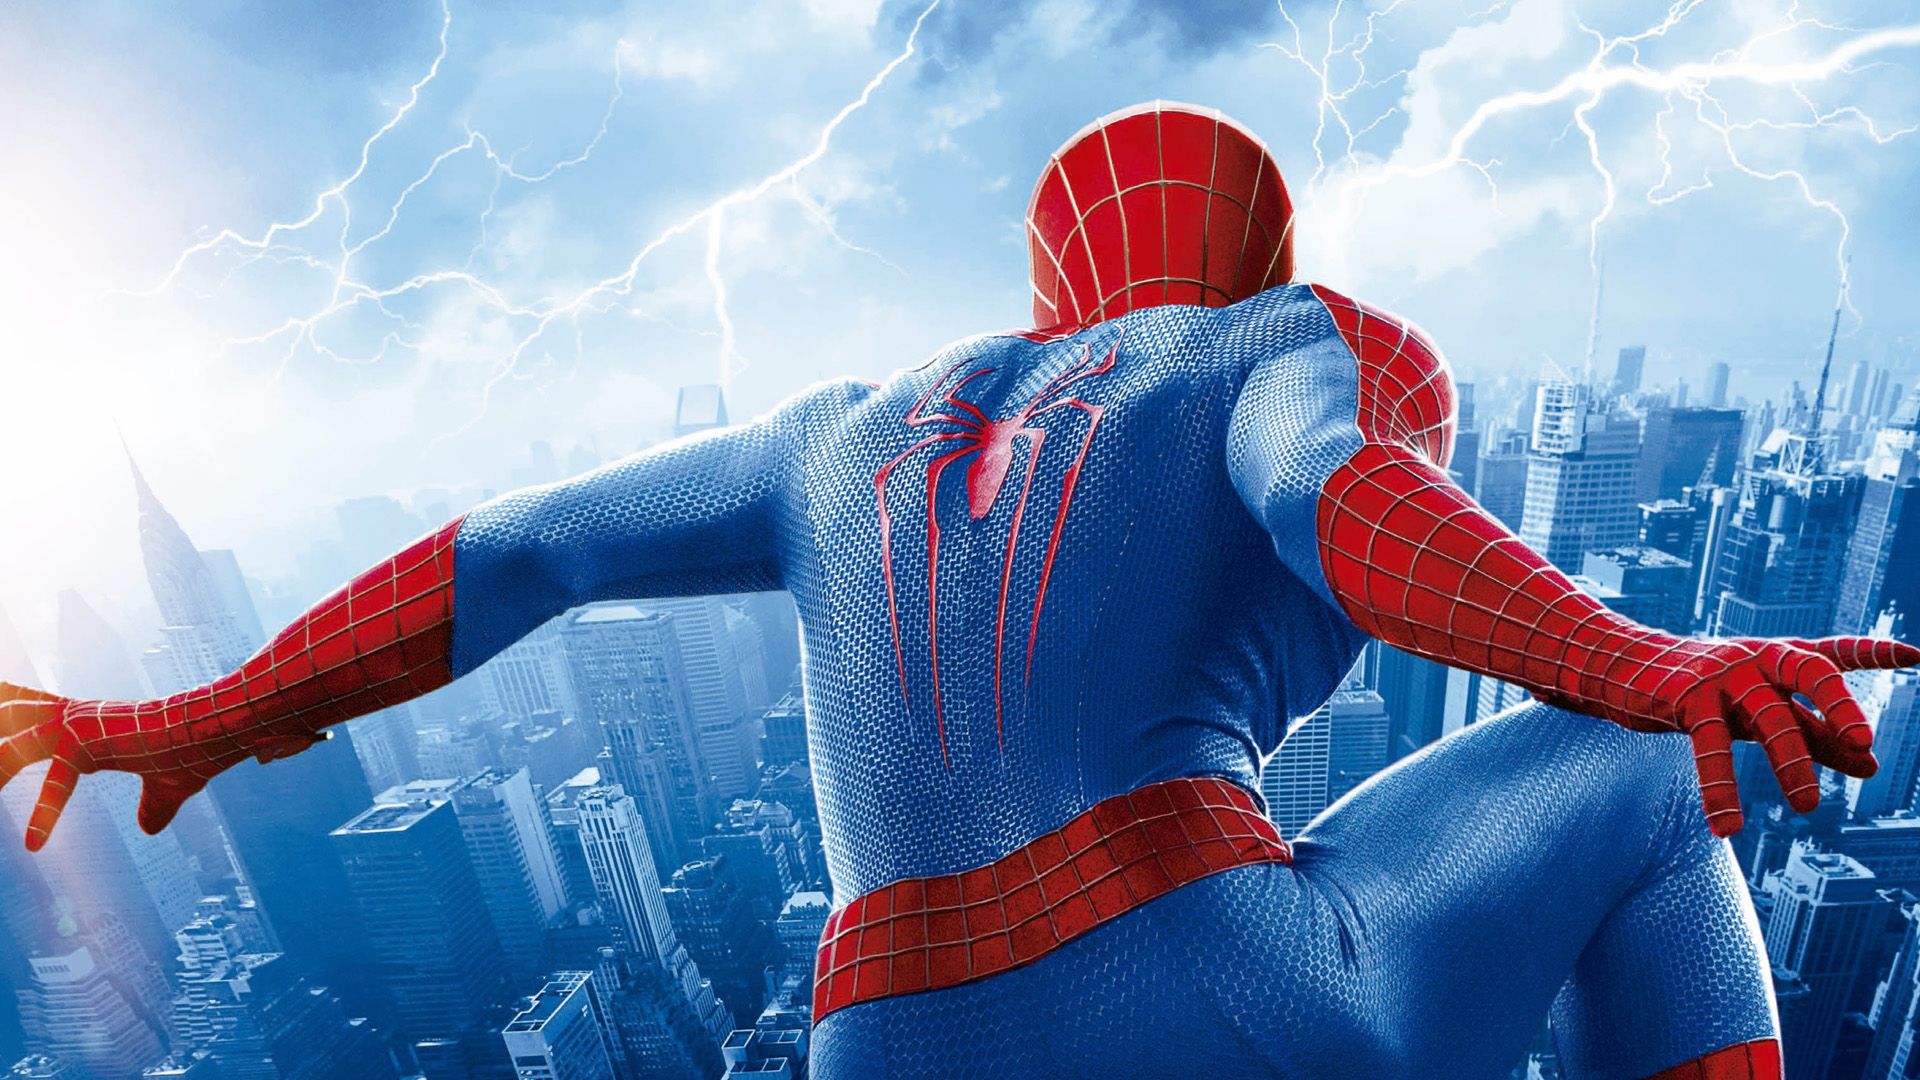 Wallpaper The Amazing Spider-Man 2, 2014 movie